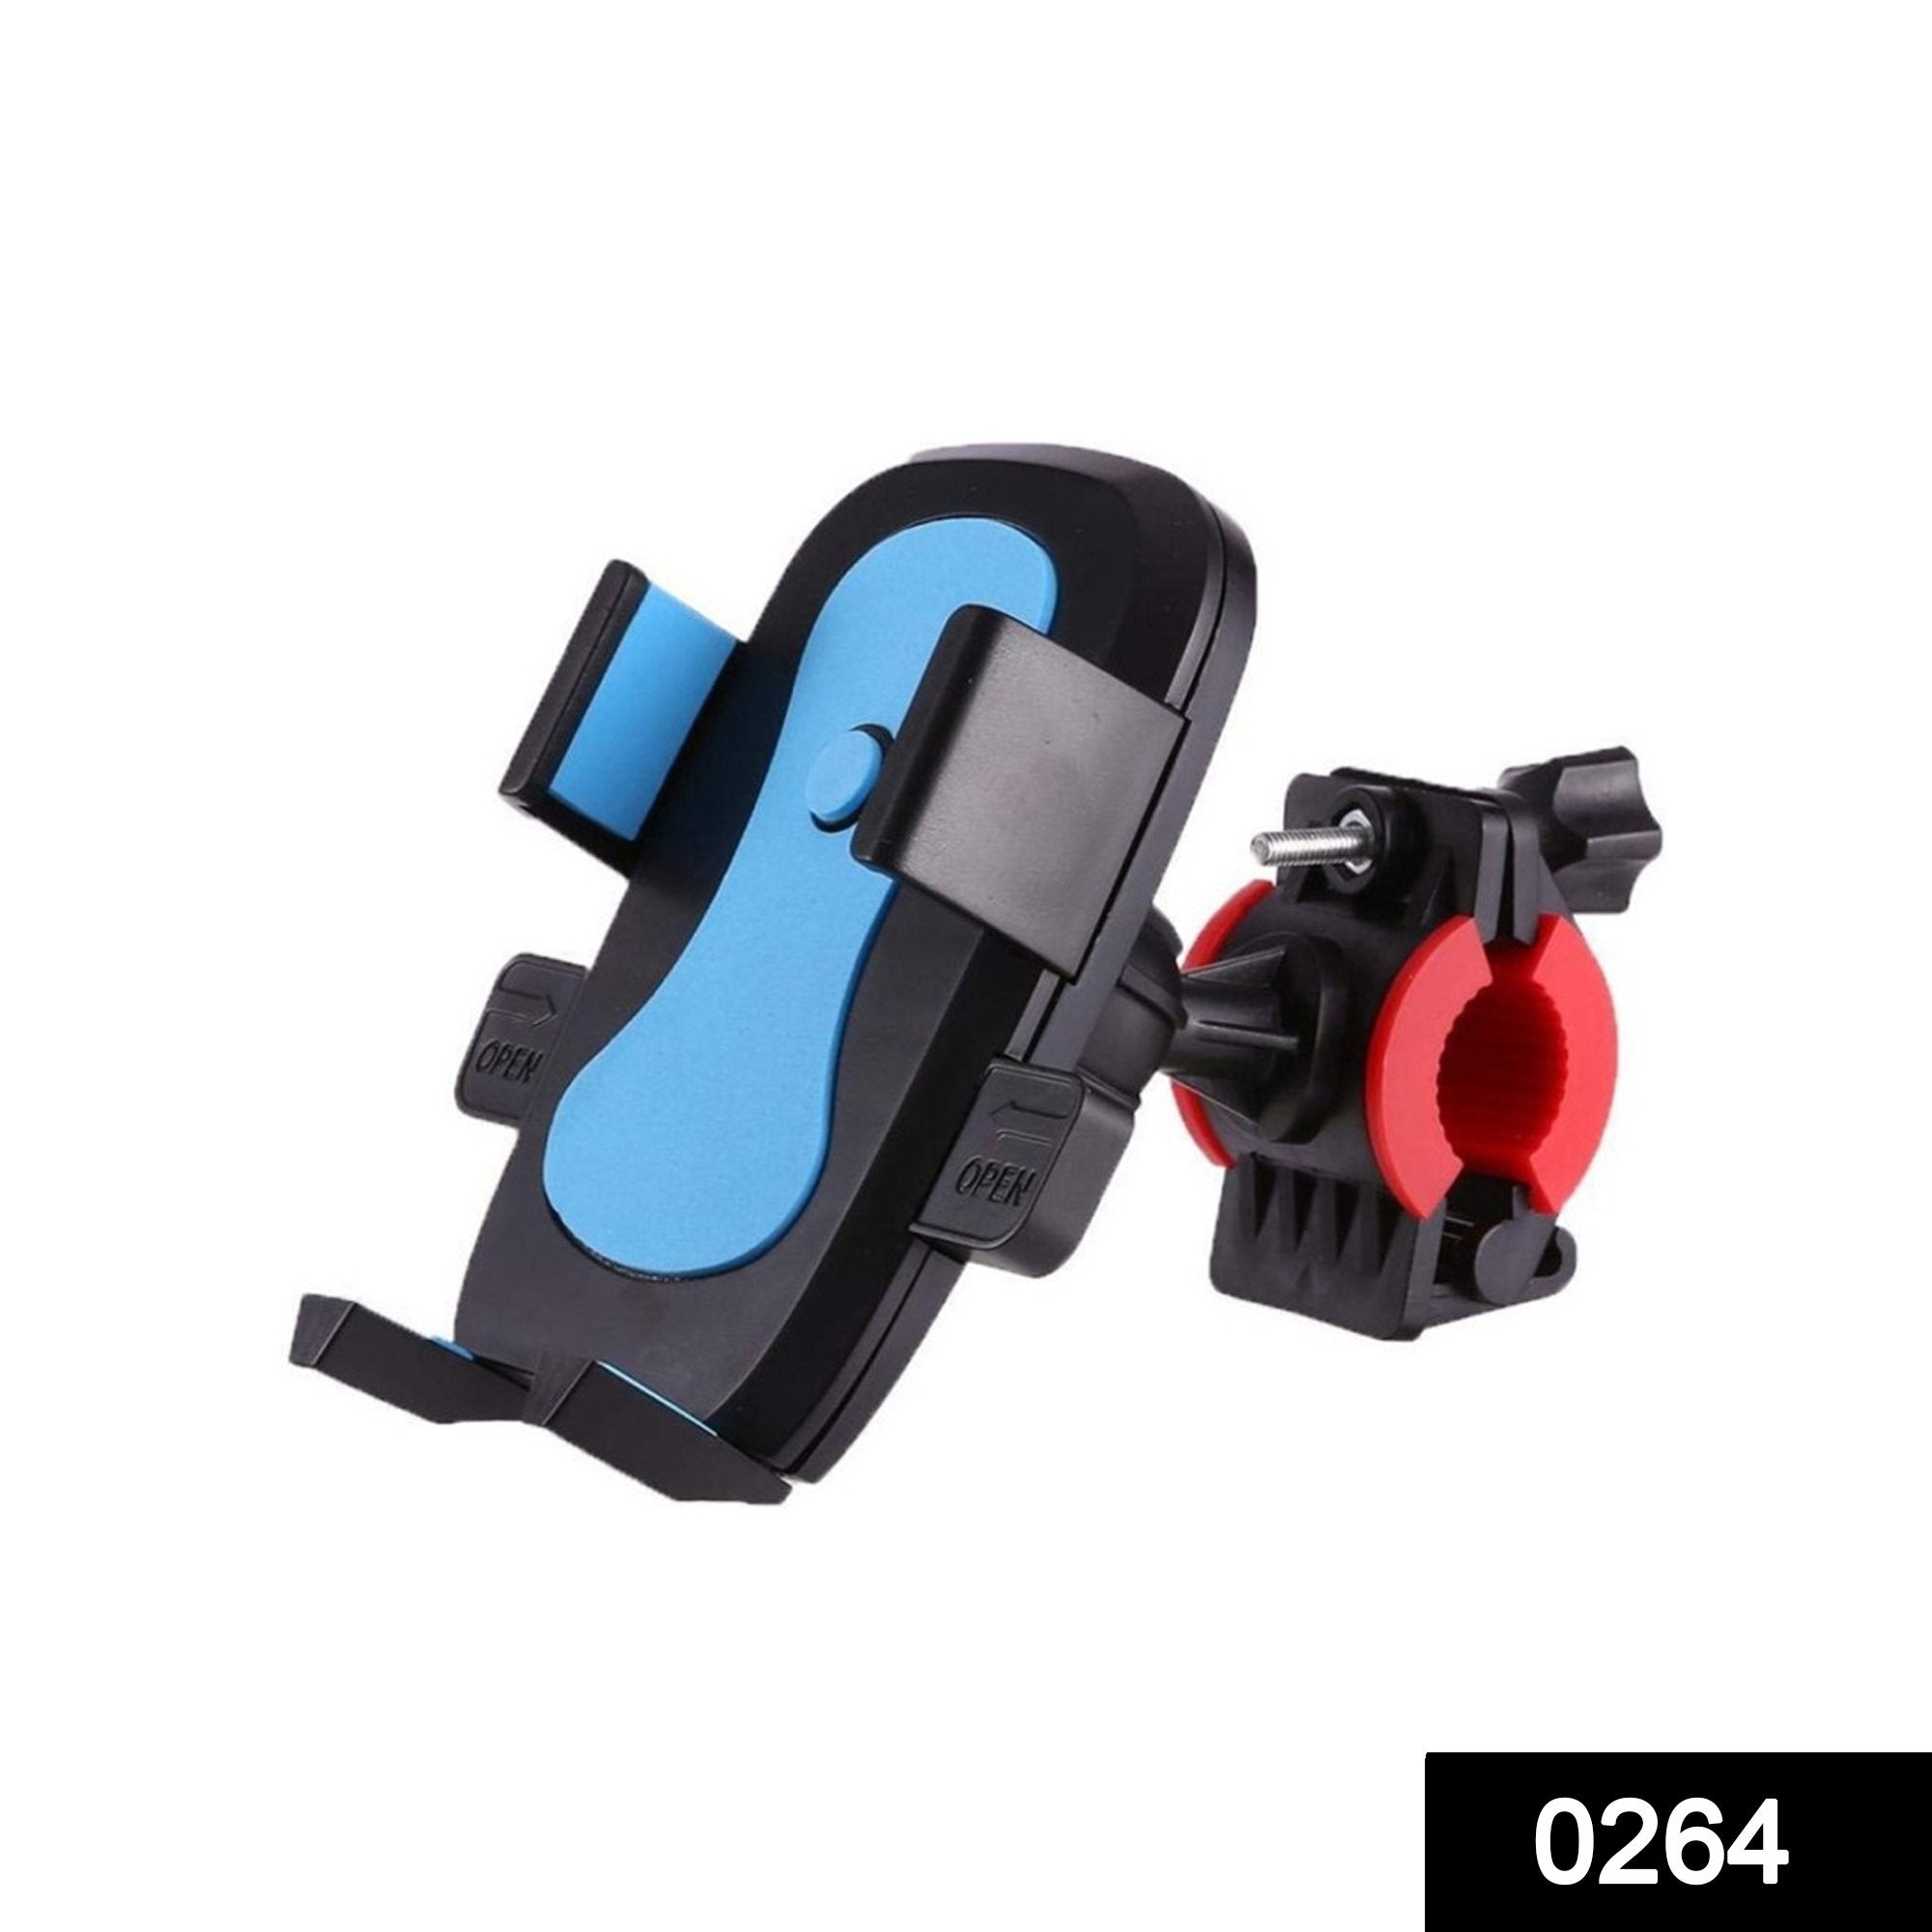 264 universal bike phone mount for bike handlebars